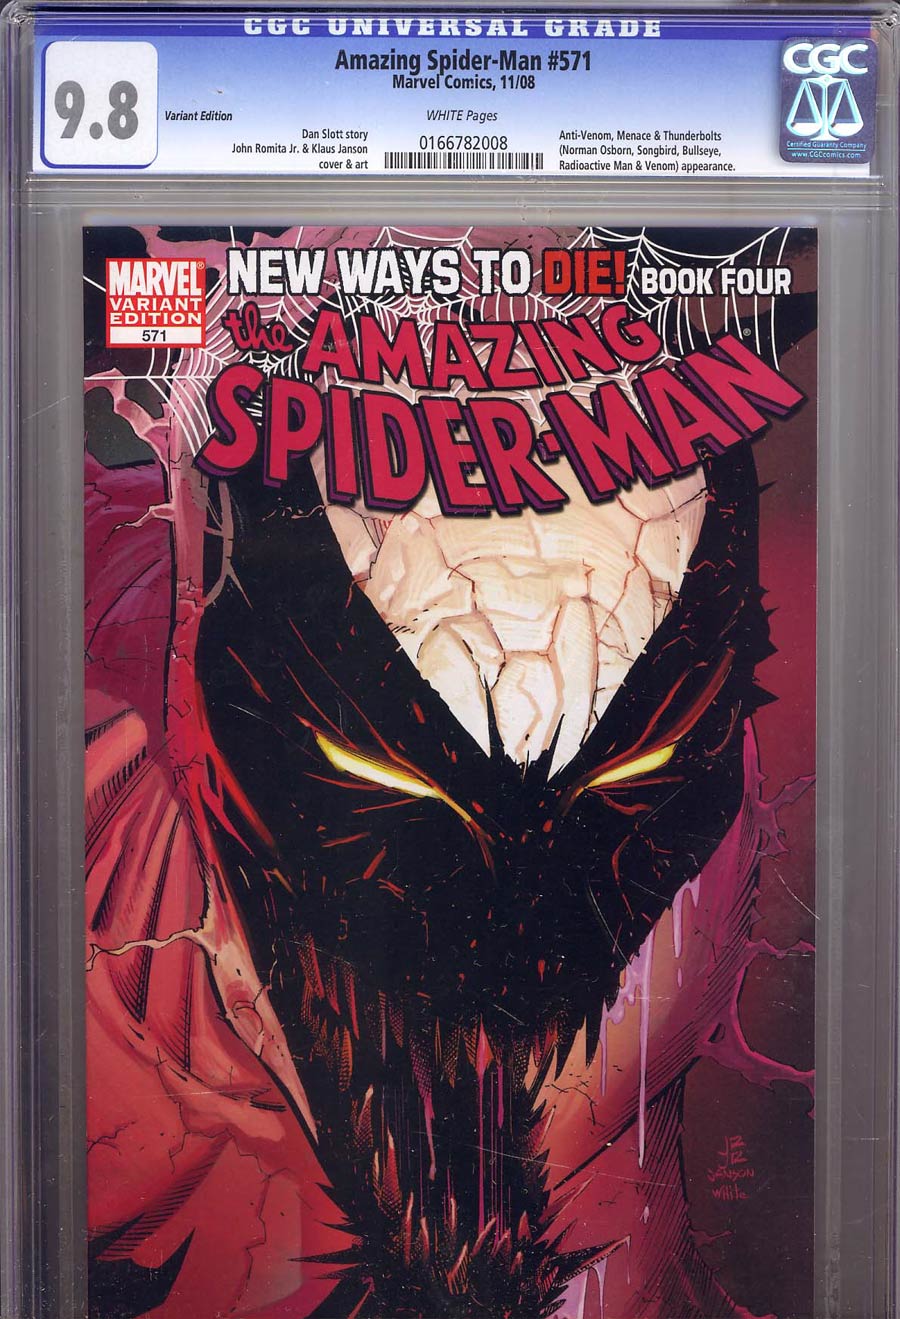 Amazing Spider-Man Vol 2 #571 CGC 9.8 1st Ptg Variant John Romita Jr Anti-Venom Cover